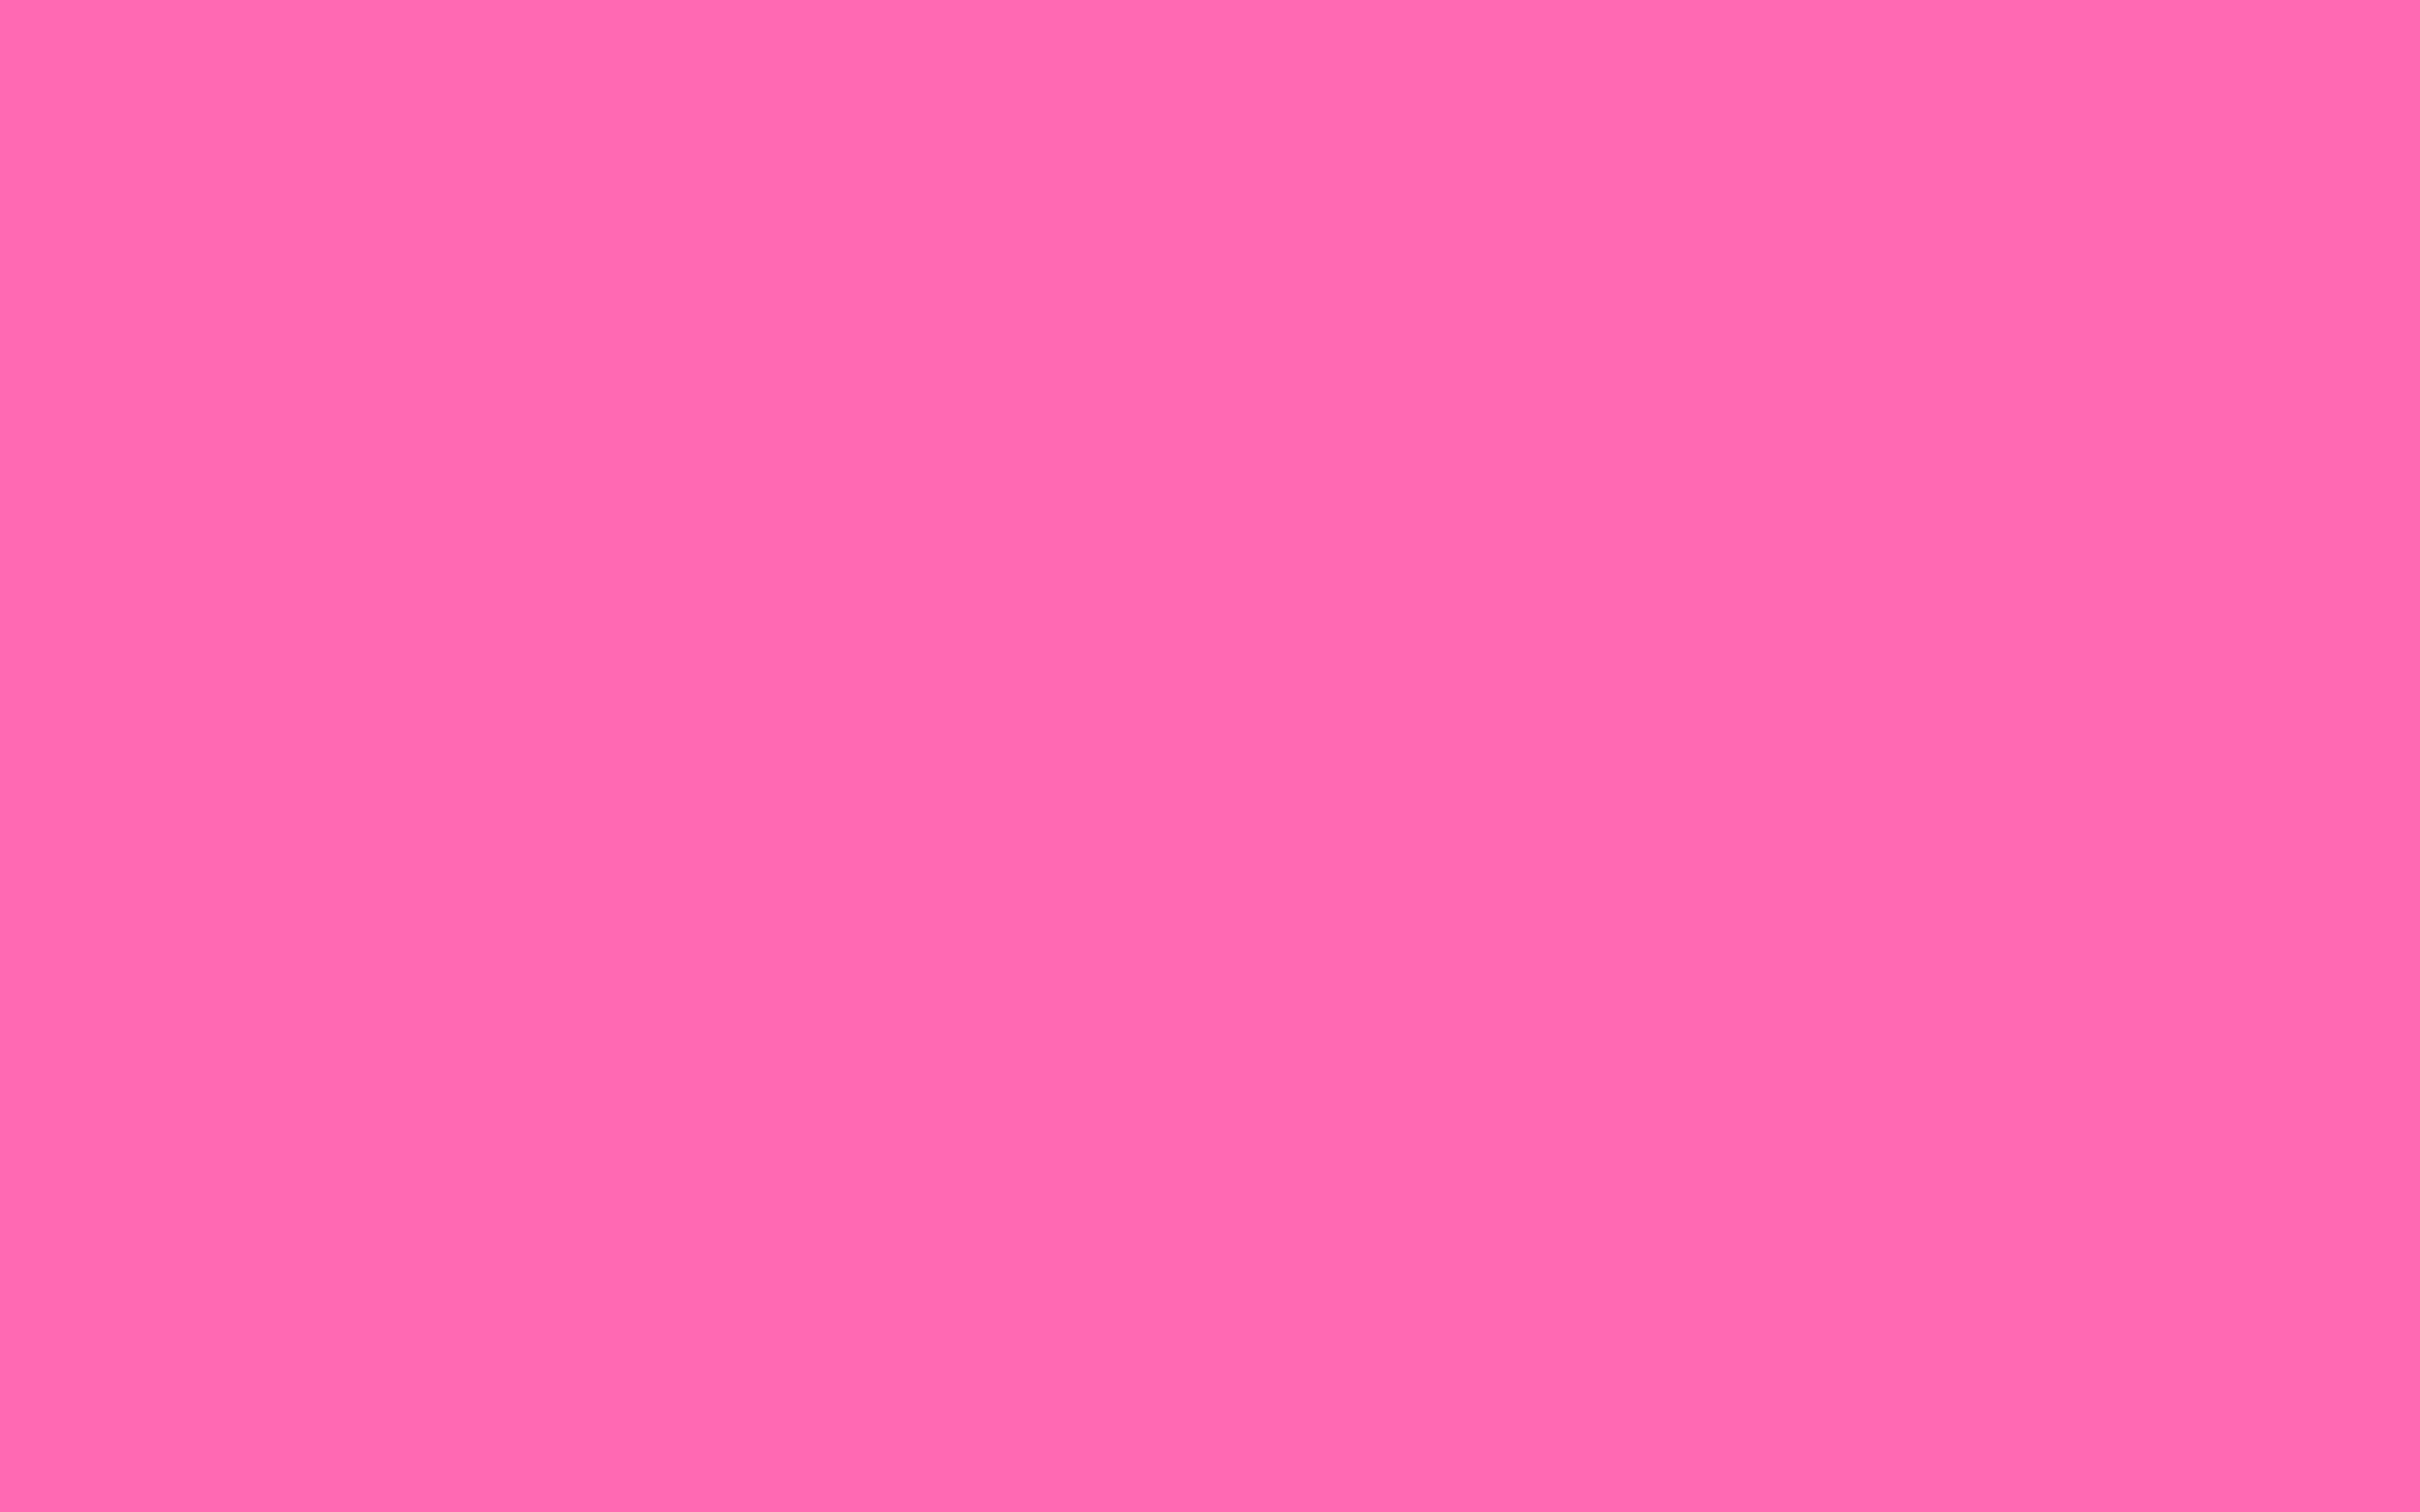 Solid Pink Wallpaper HD 2880x1800